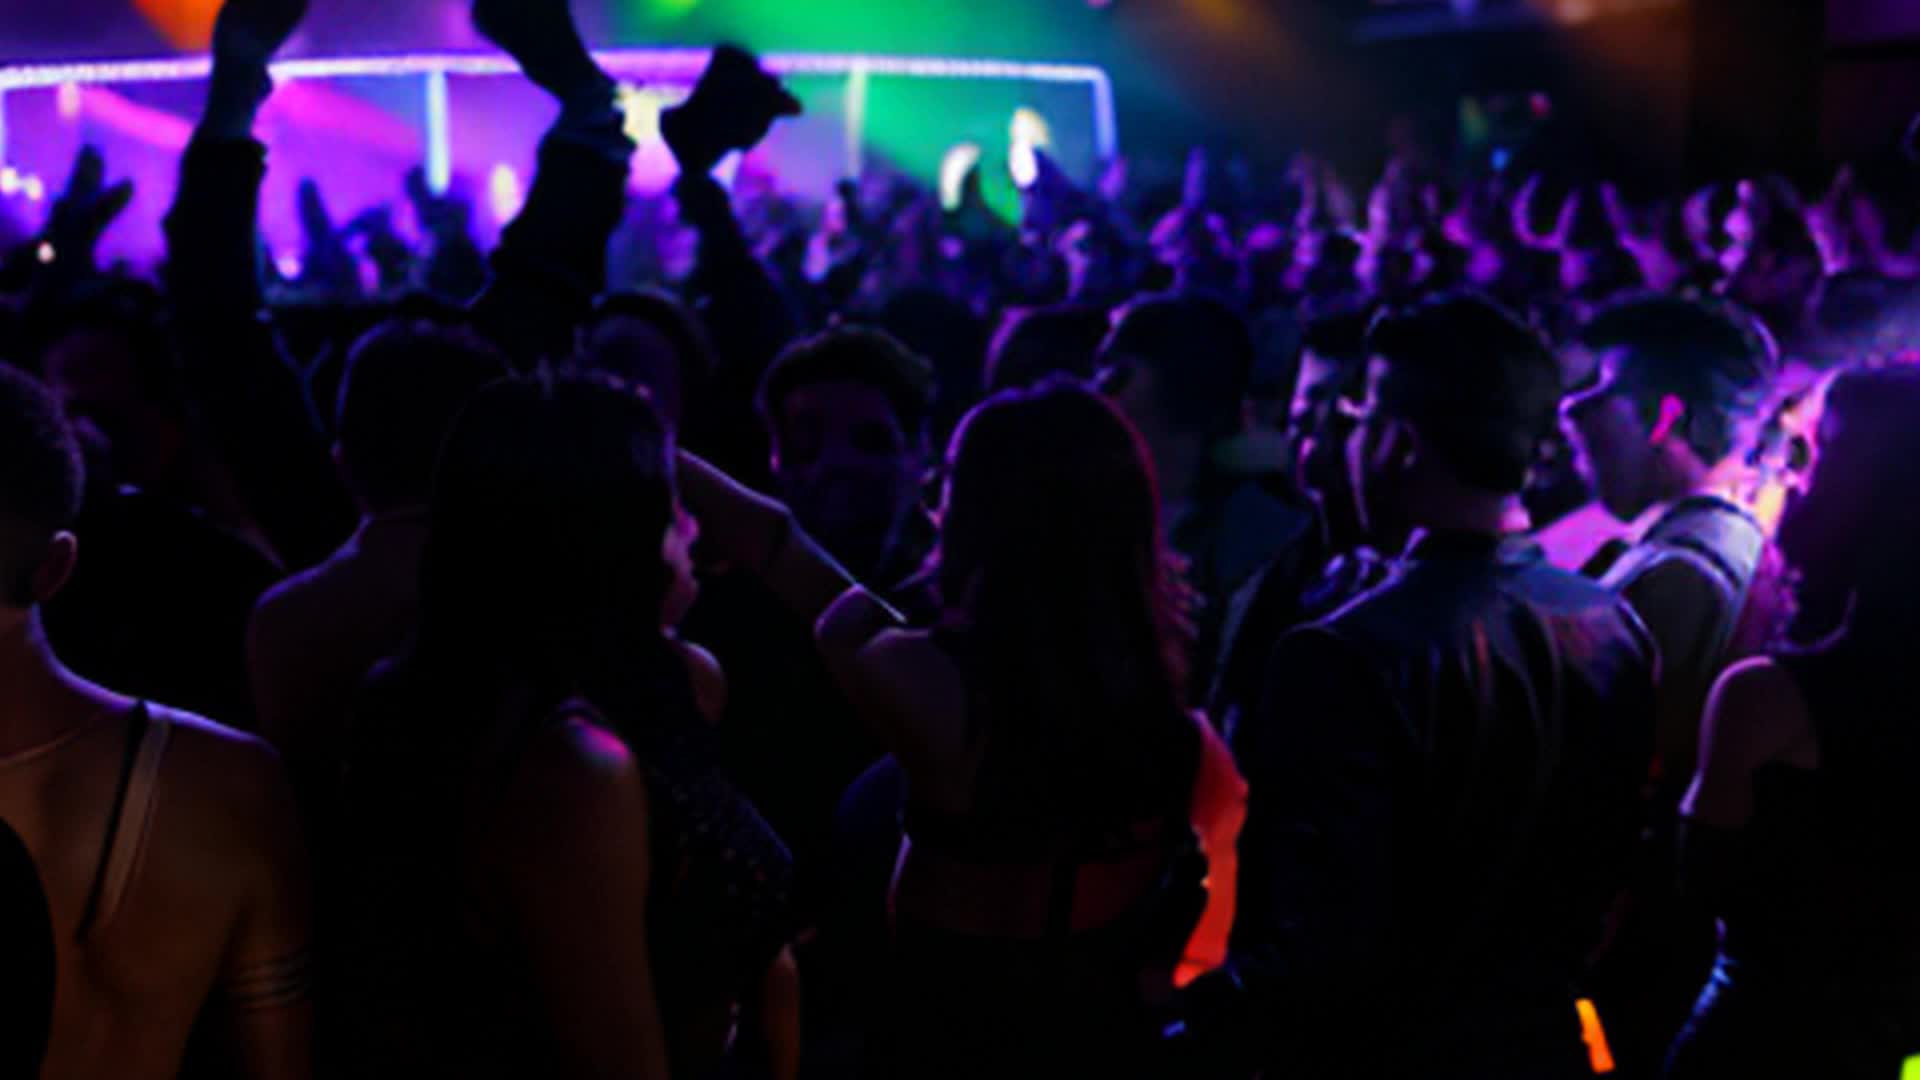 nightclub scene, lots of people dancing, bright neon lights